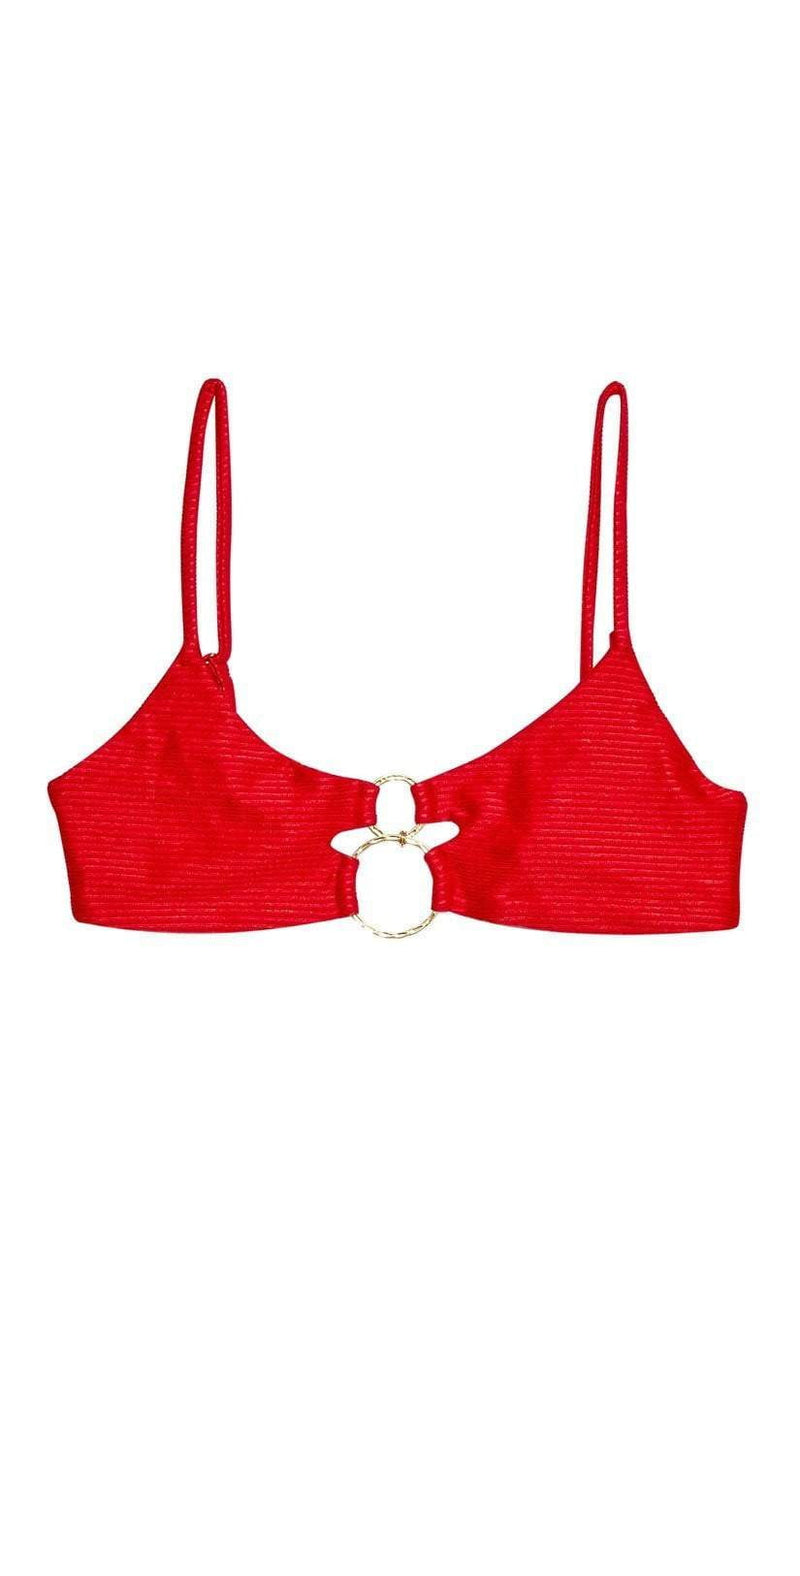 South Beach Swimsuits Beach Bunny Lexi Bralette Bikini Top in Red B19147T0  REDD – South Beach Swimsuits